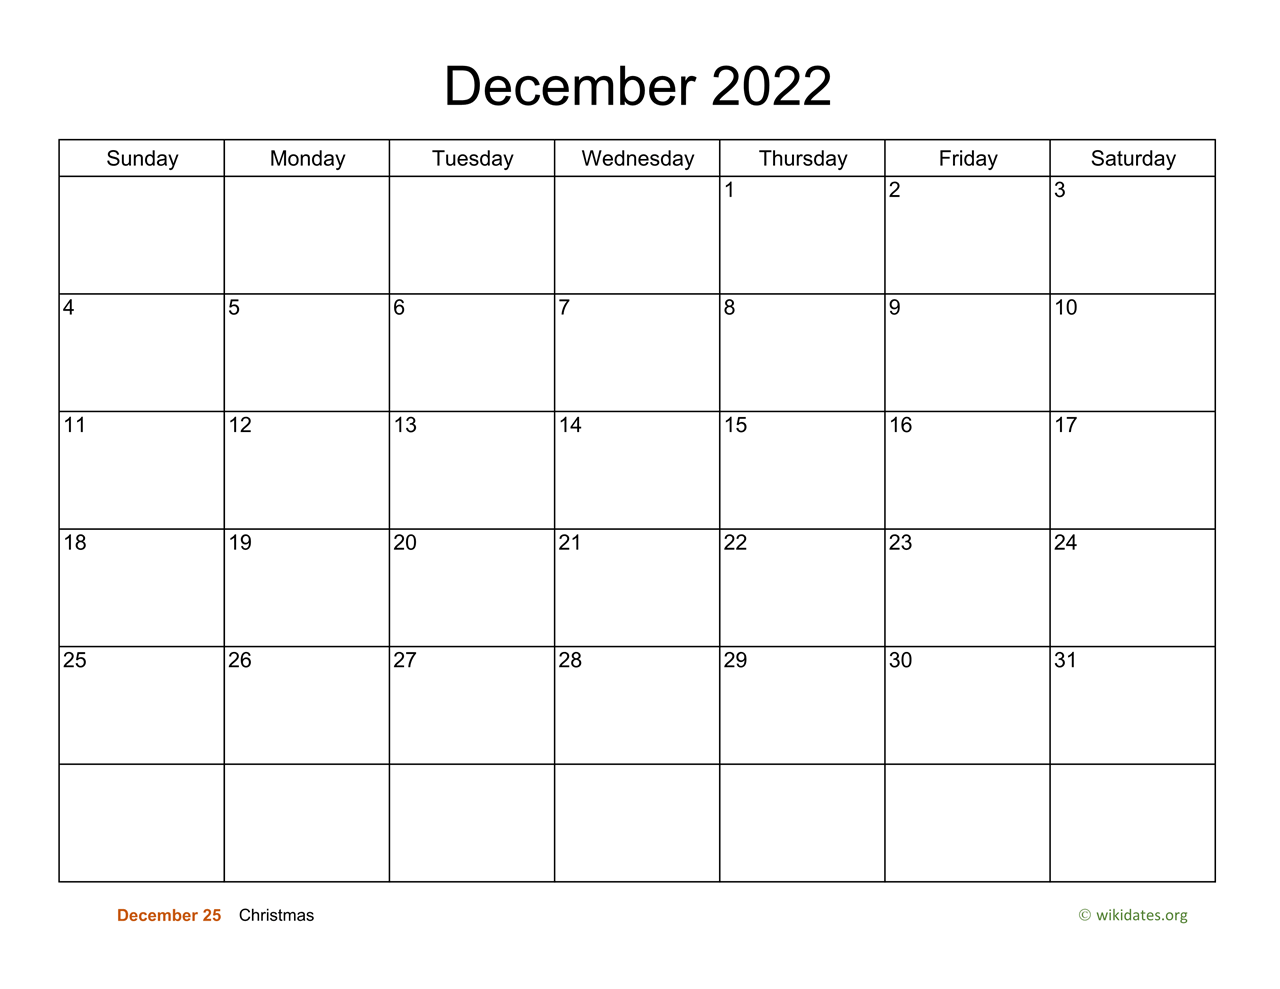 Dec Calendar 2022 Basic Calendar For December 2022 | Wikidates.org